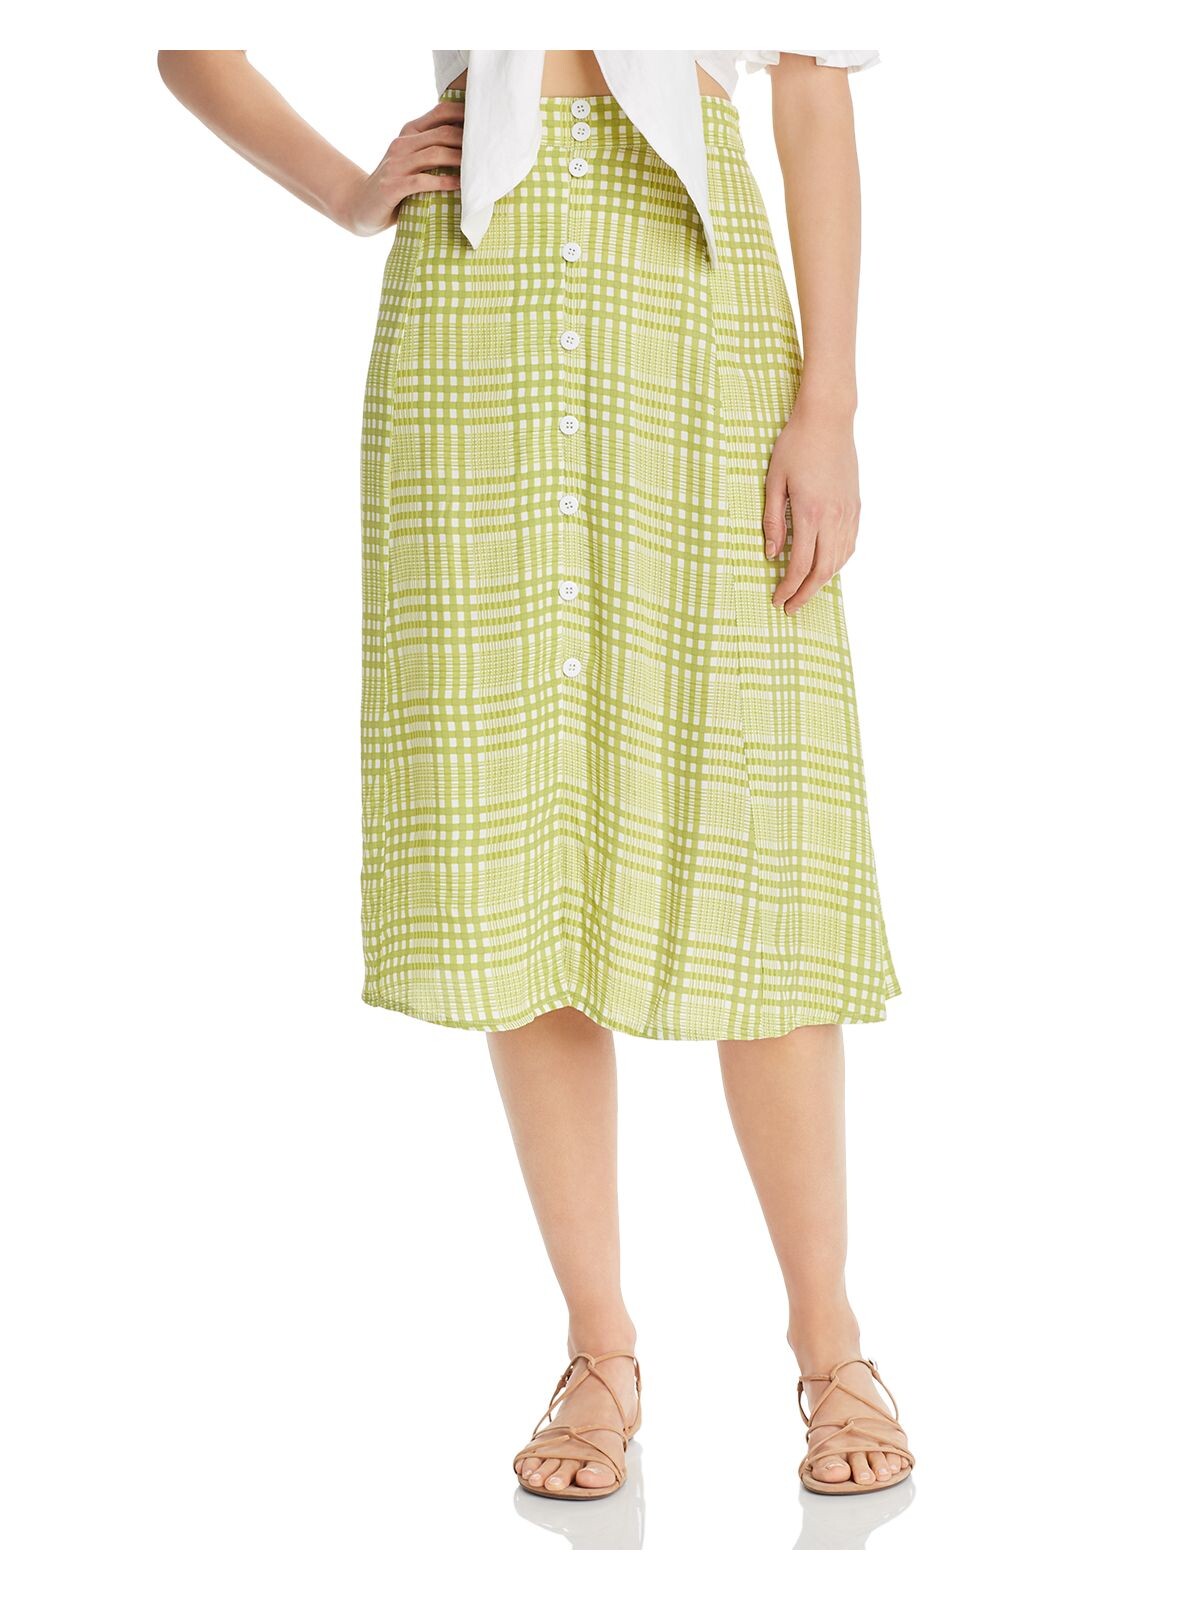 FAITHFULL THE BRAND Womens Green Slitted Plaid Midi A-Line Skirt S